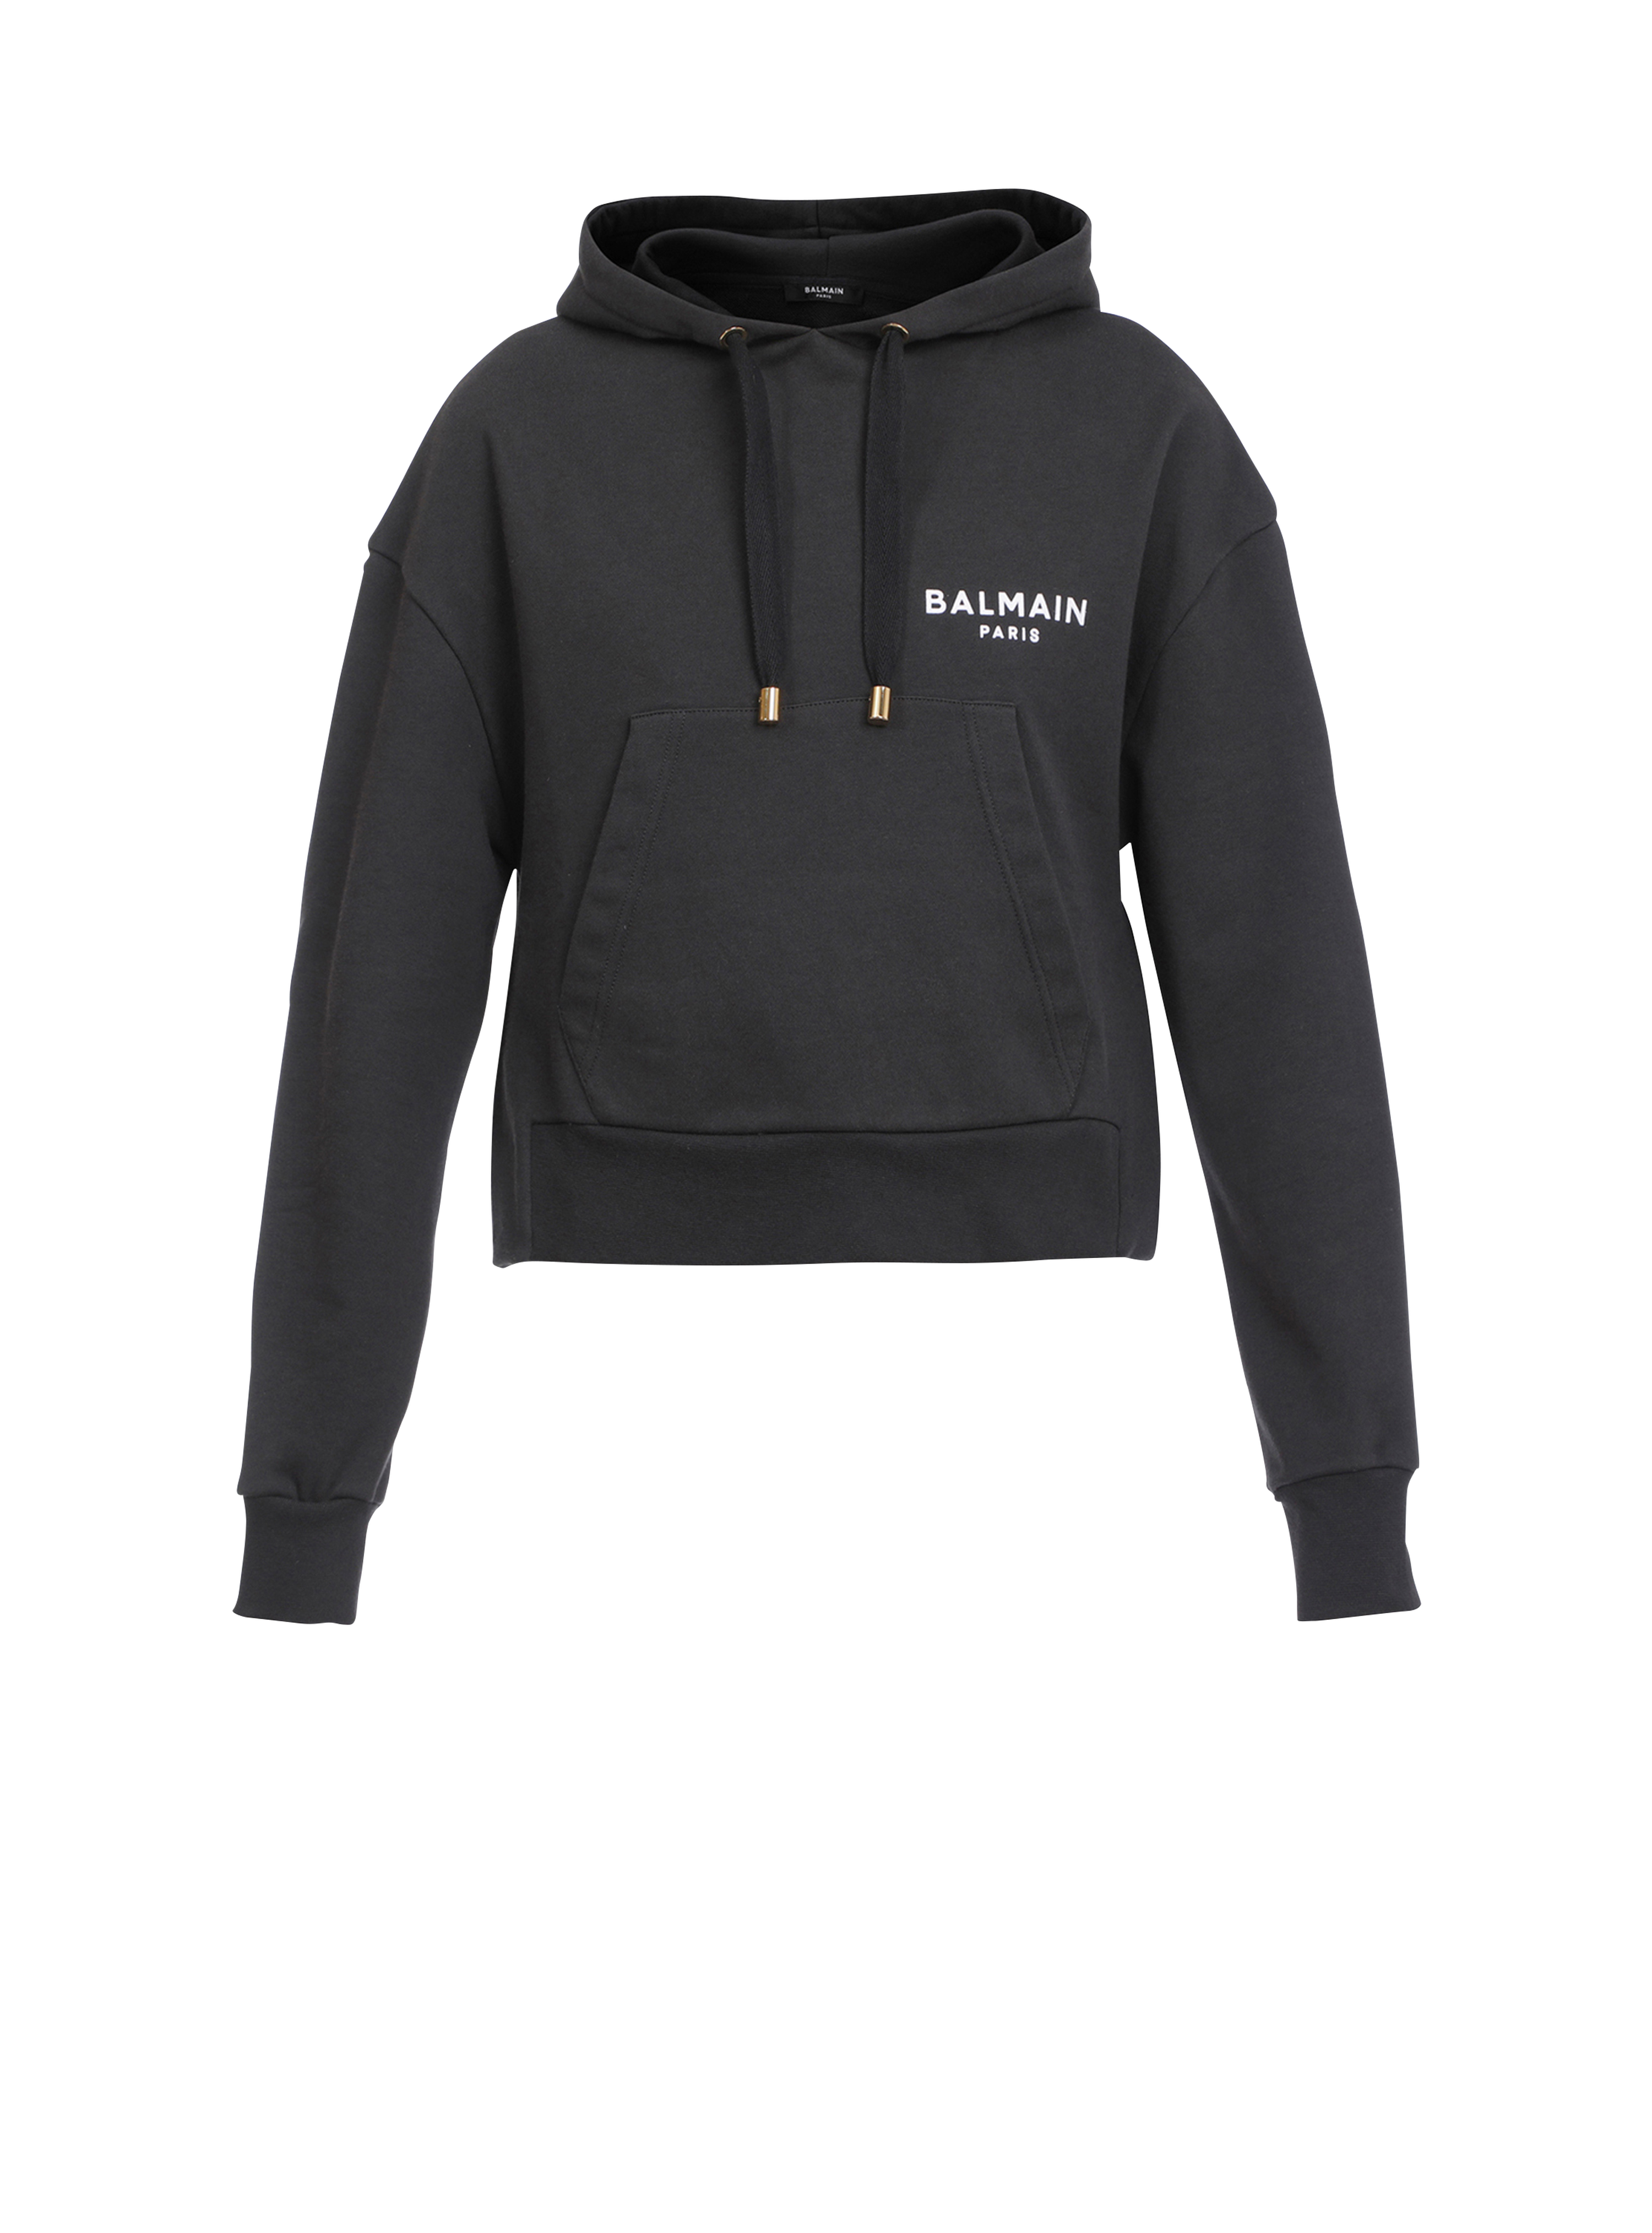 Eco-designed cotton sweatshirt with flocked Balmain logo, black